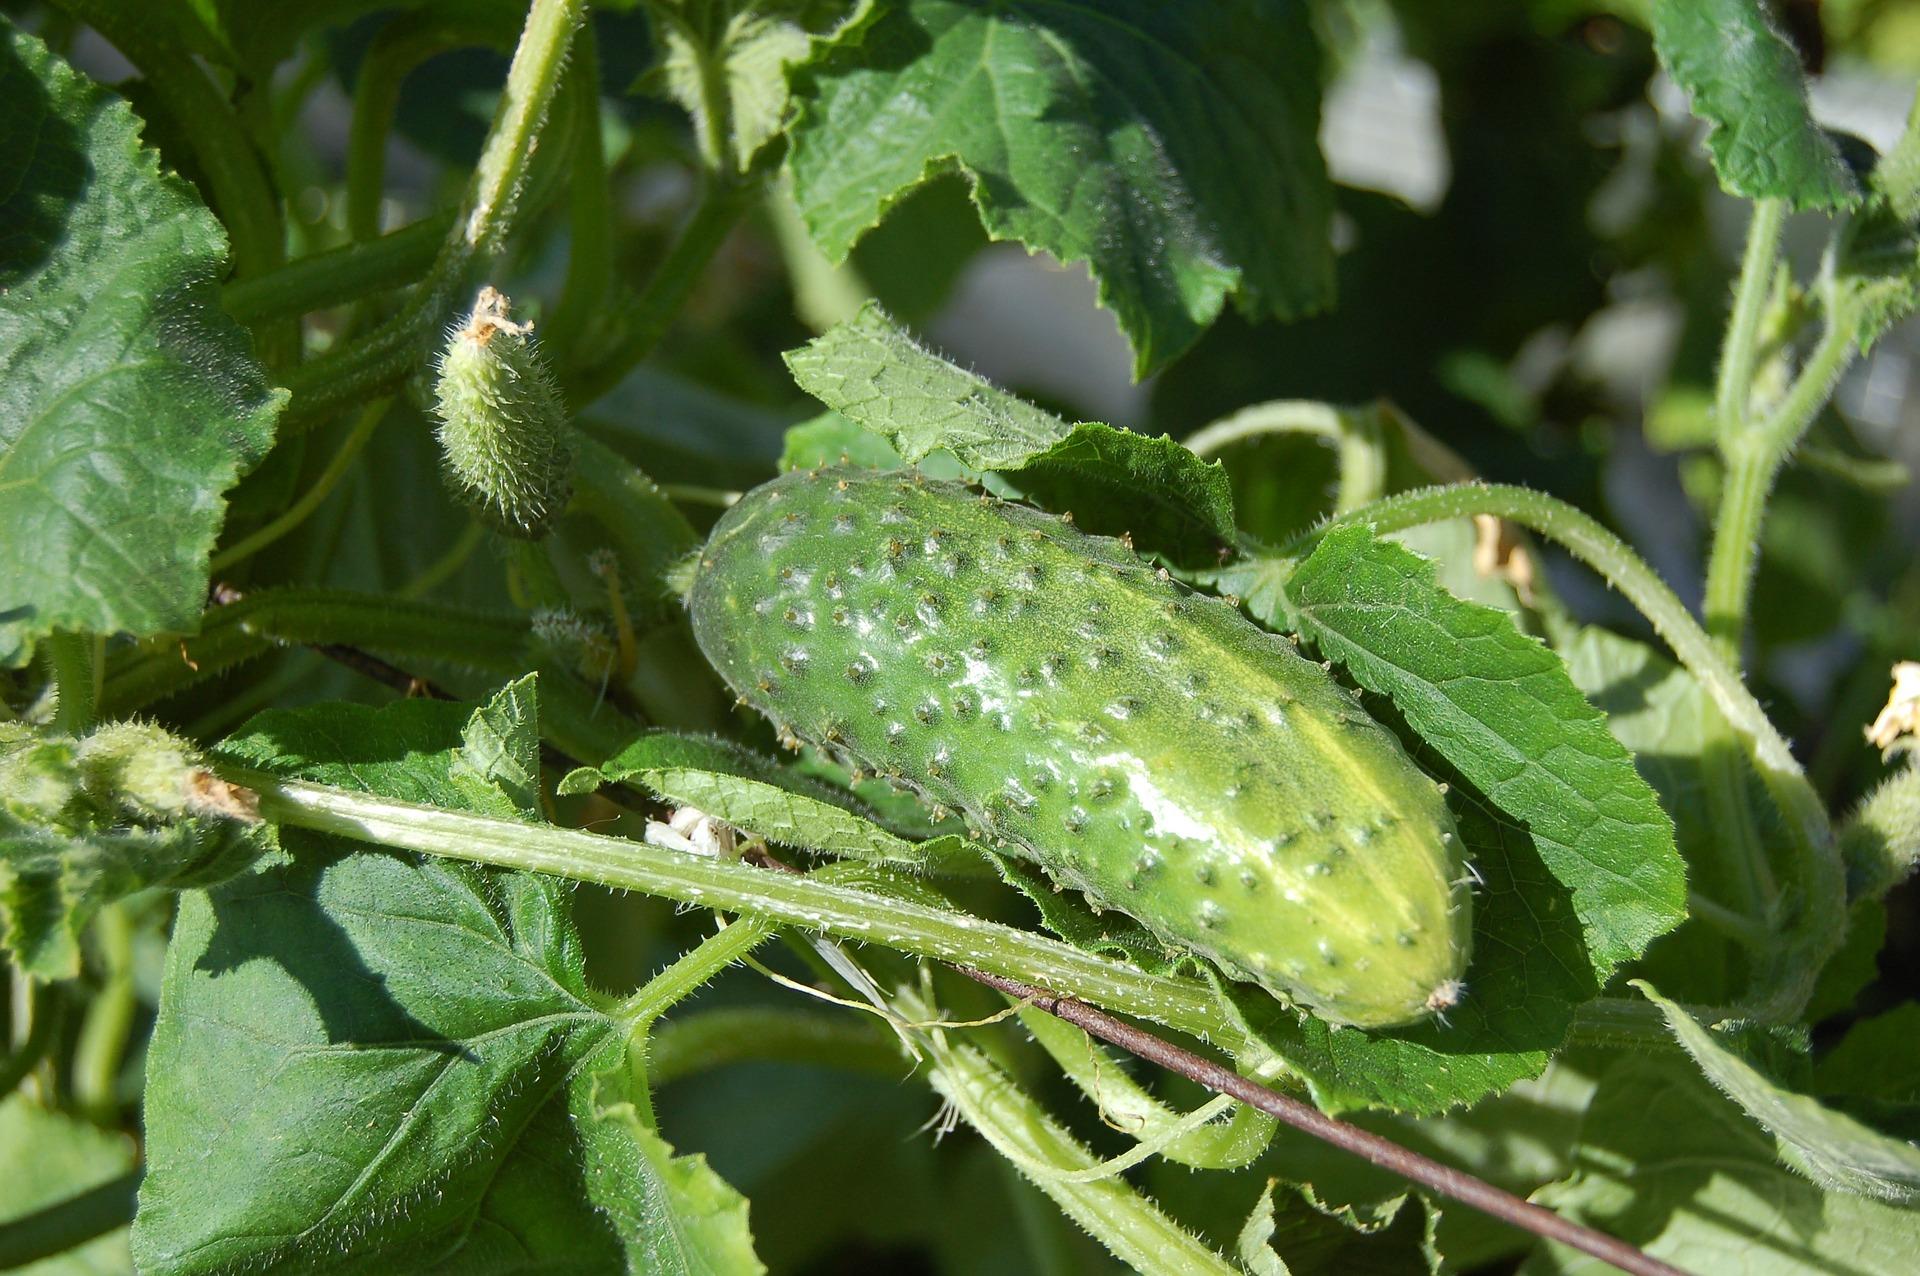 Growing Cucumbers in a Home Garden